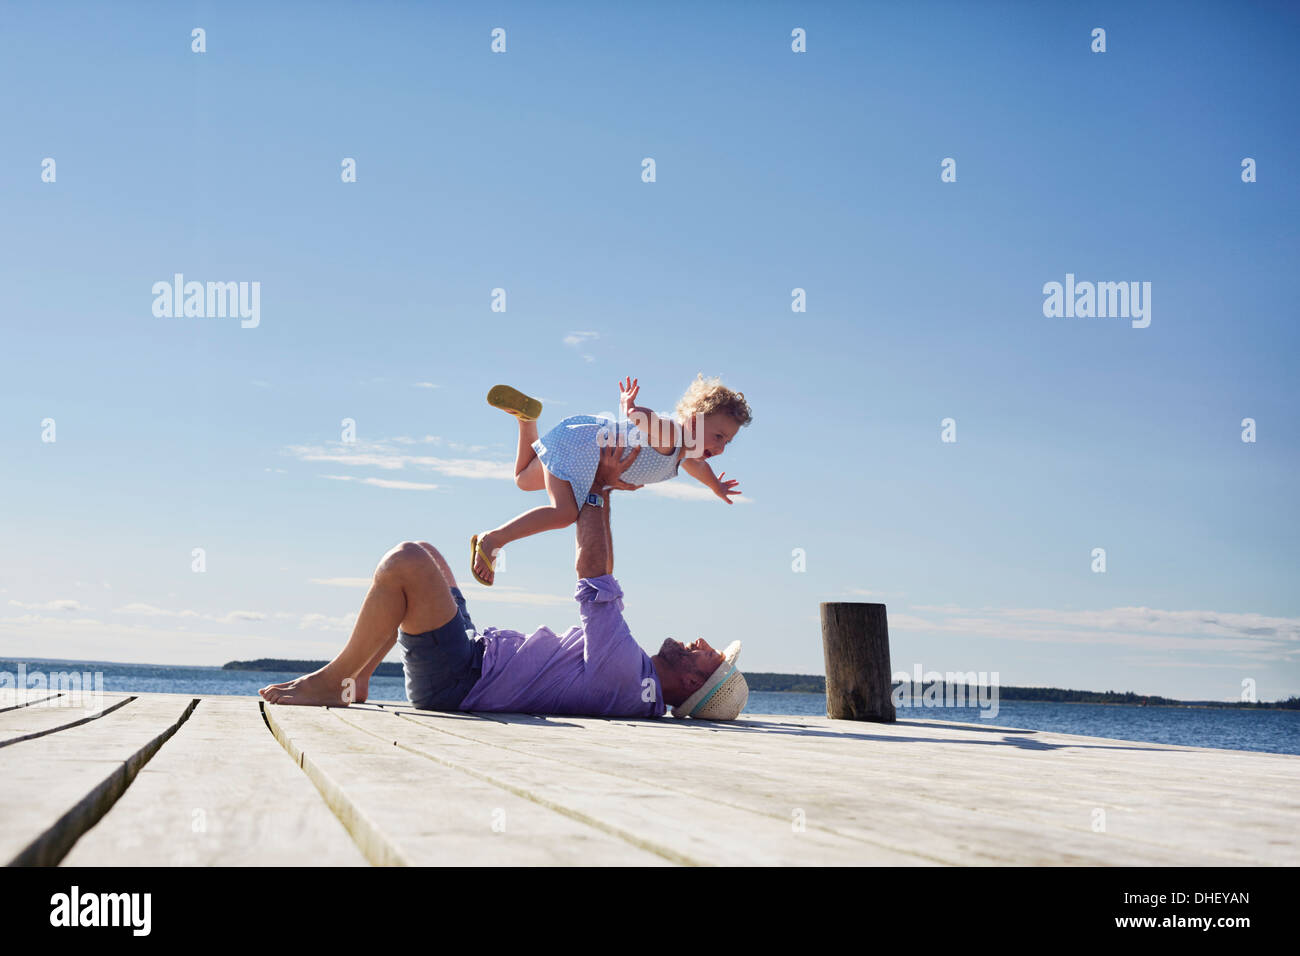 Toddler femmina e padre giocando, Utvalnas, Gavle, Svezia Foto Stock